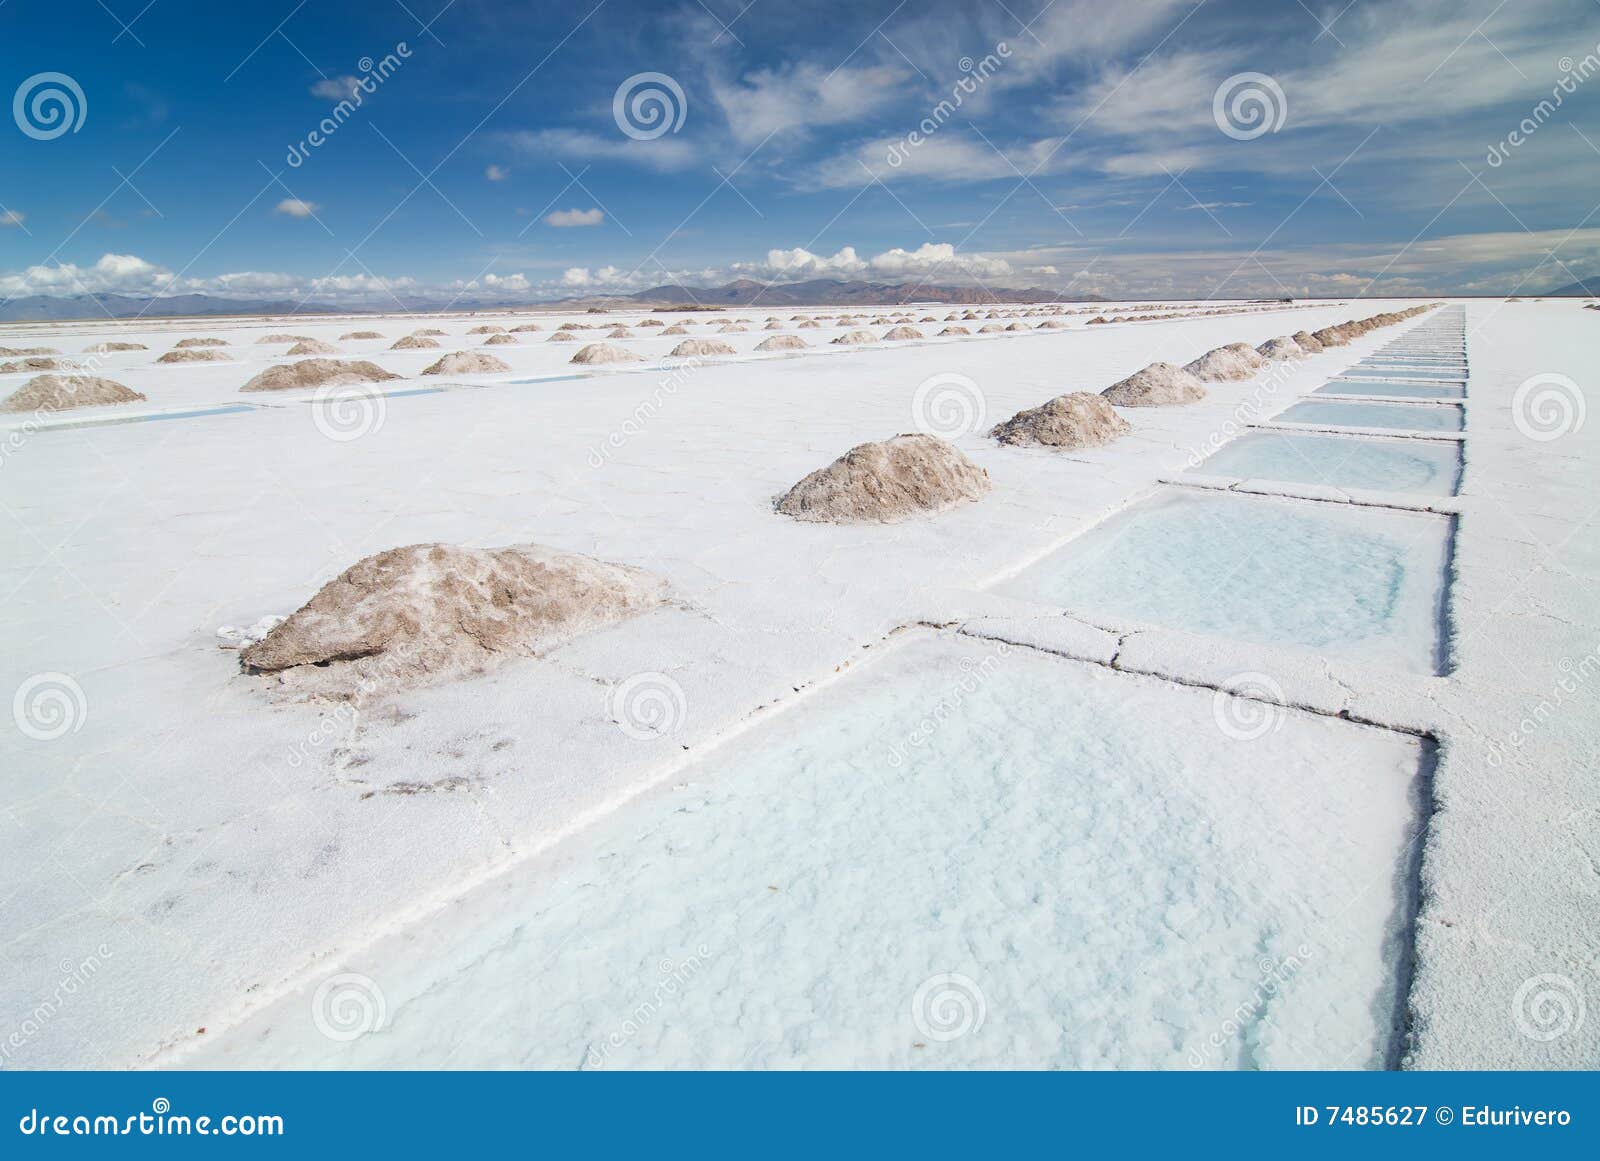 salt extraction pools in salinas grandes